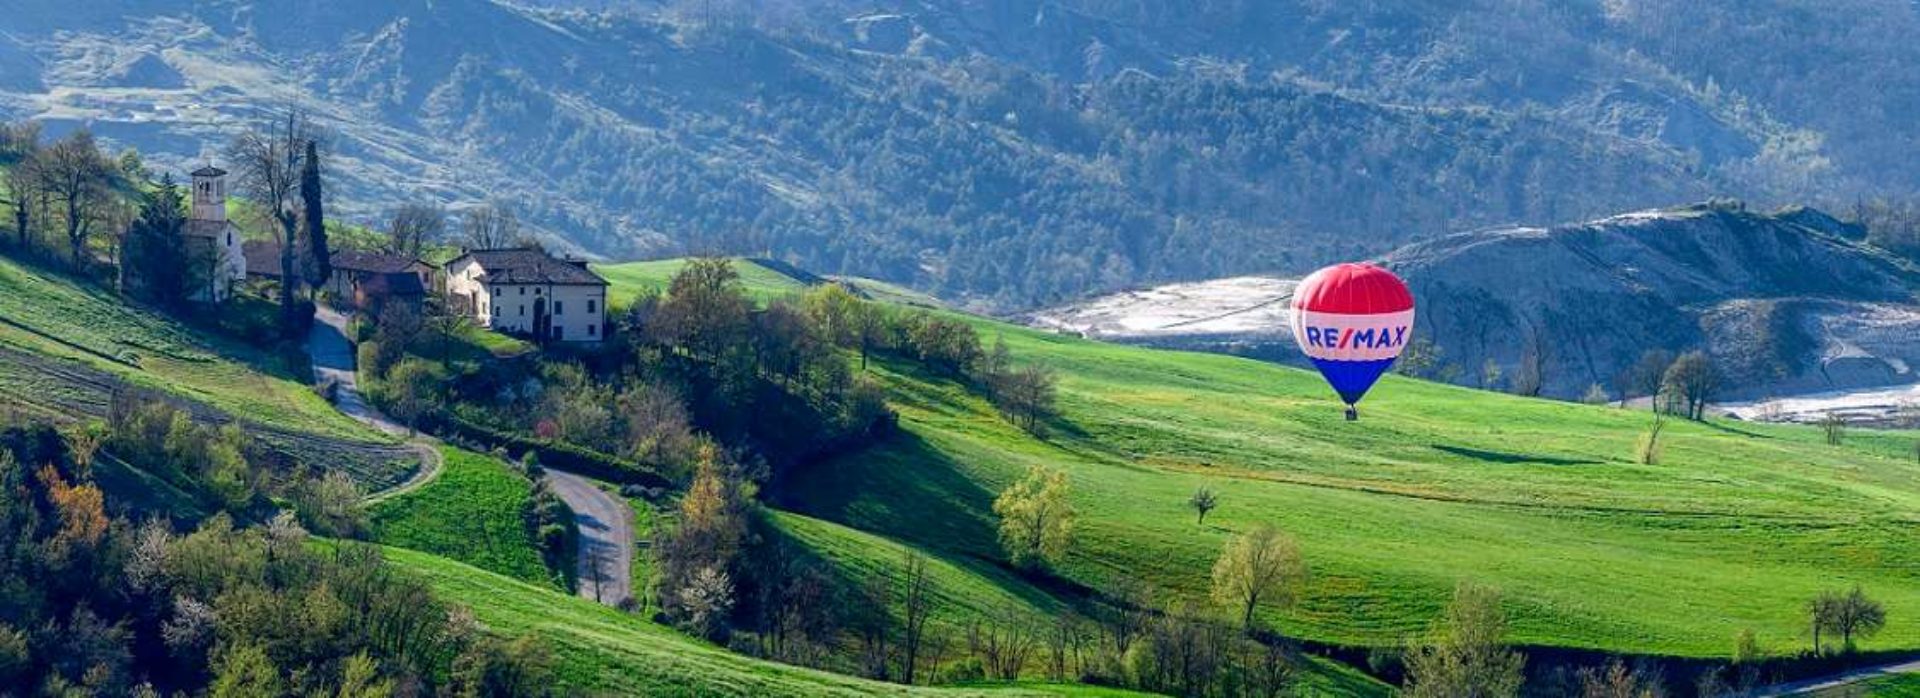 Hot Air Balloon Rides Reggio Emilia